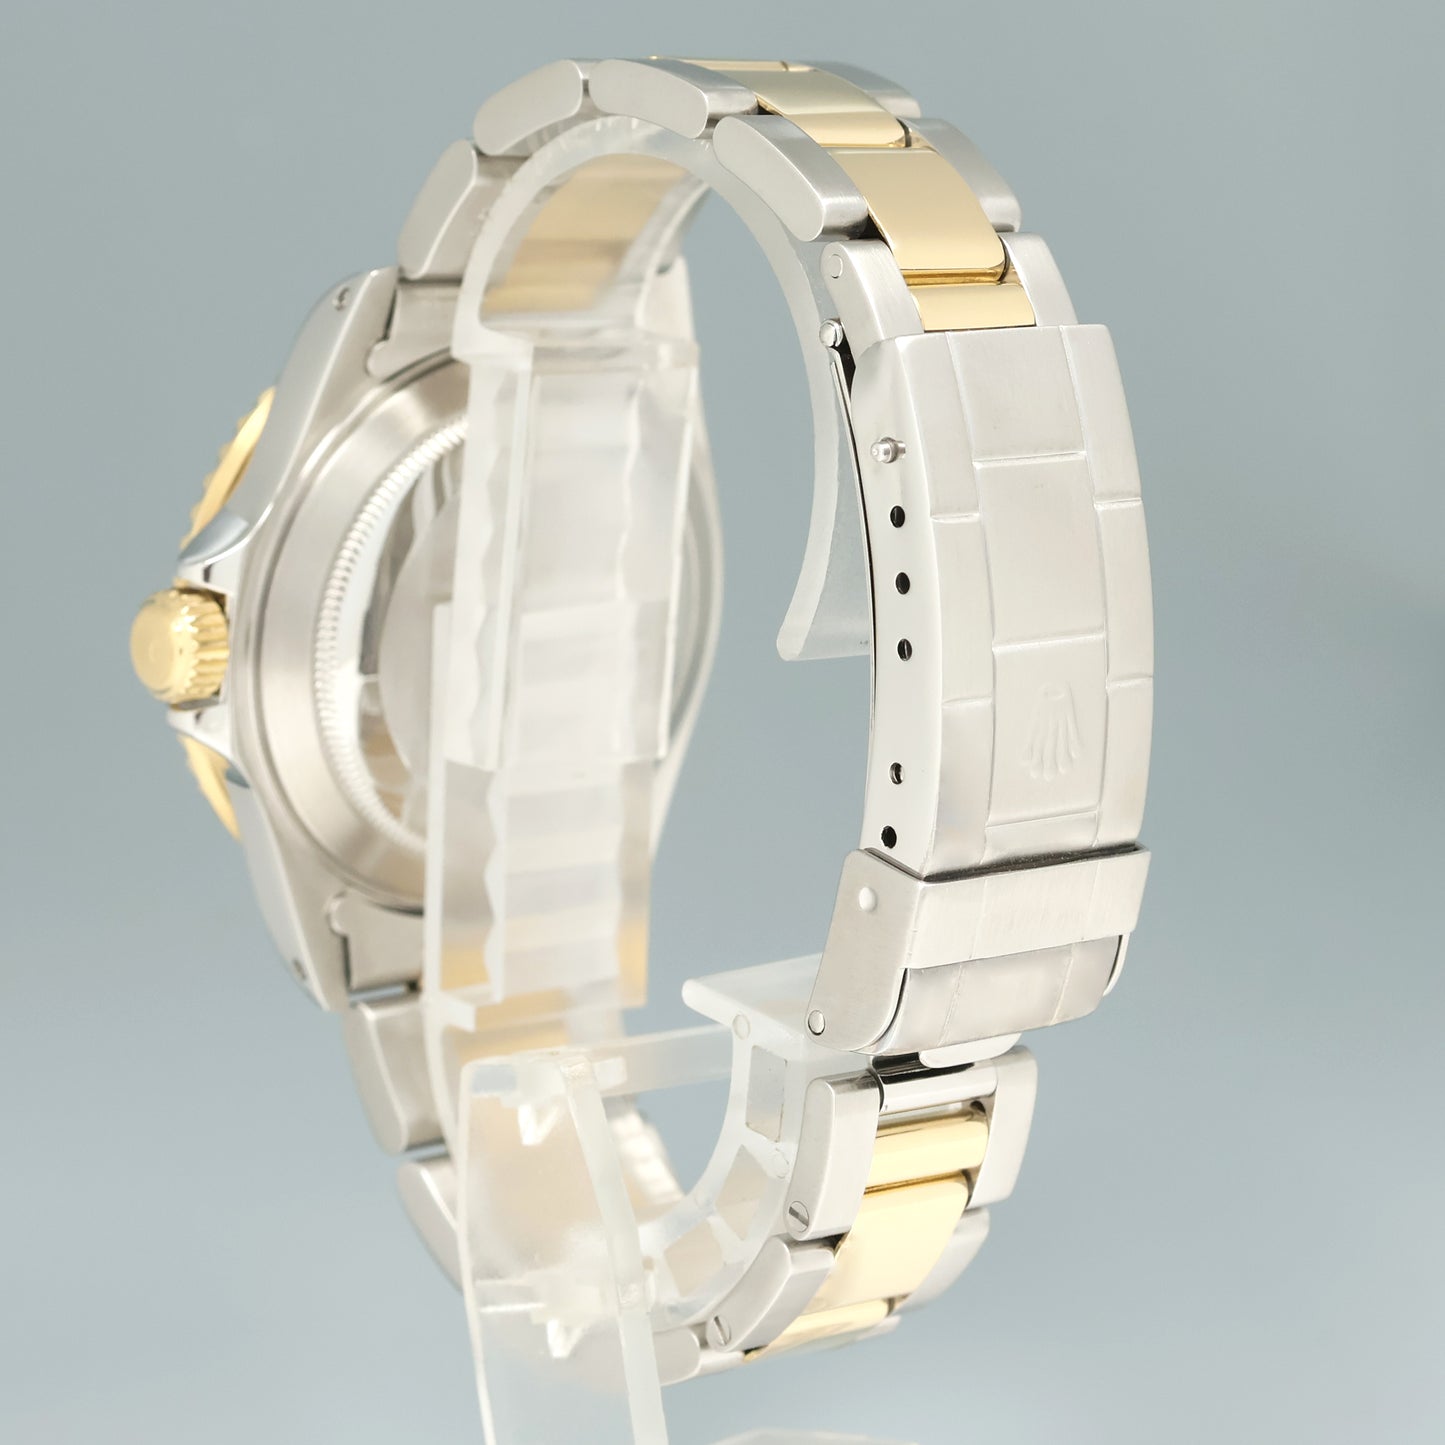 PAPERS 2000 MINT Rolex Submariner 16613 Two Tone Gold Serti Diamond Watch Box